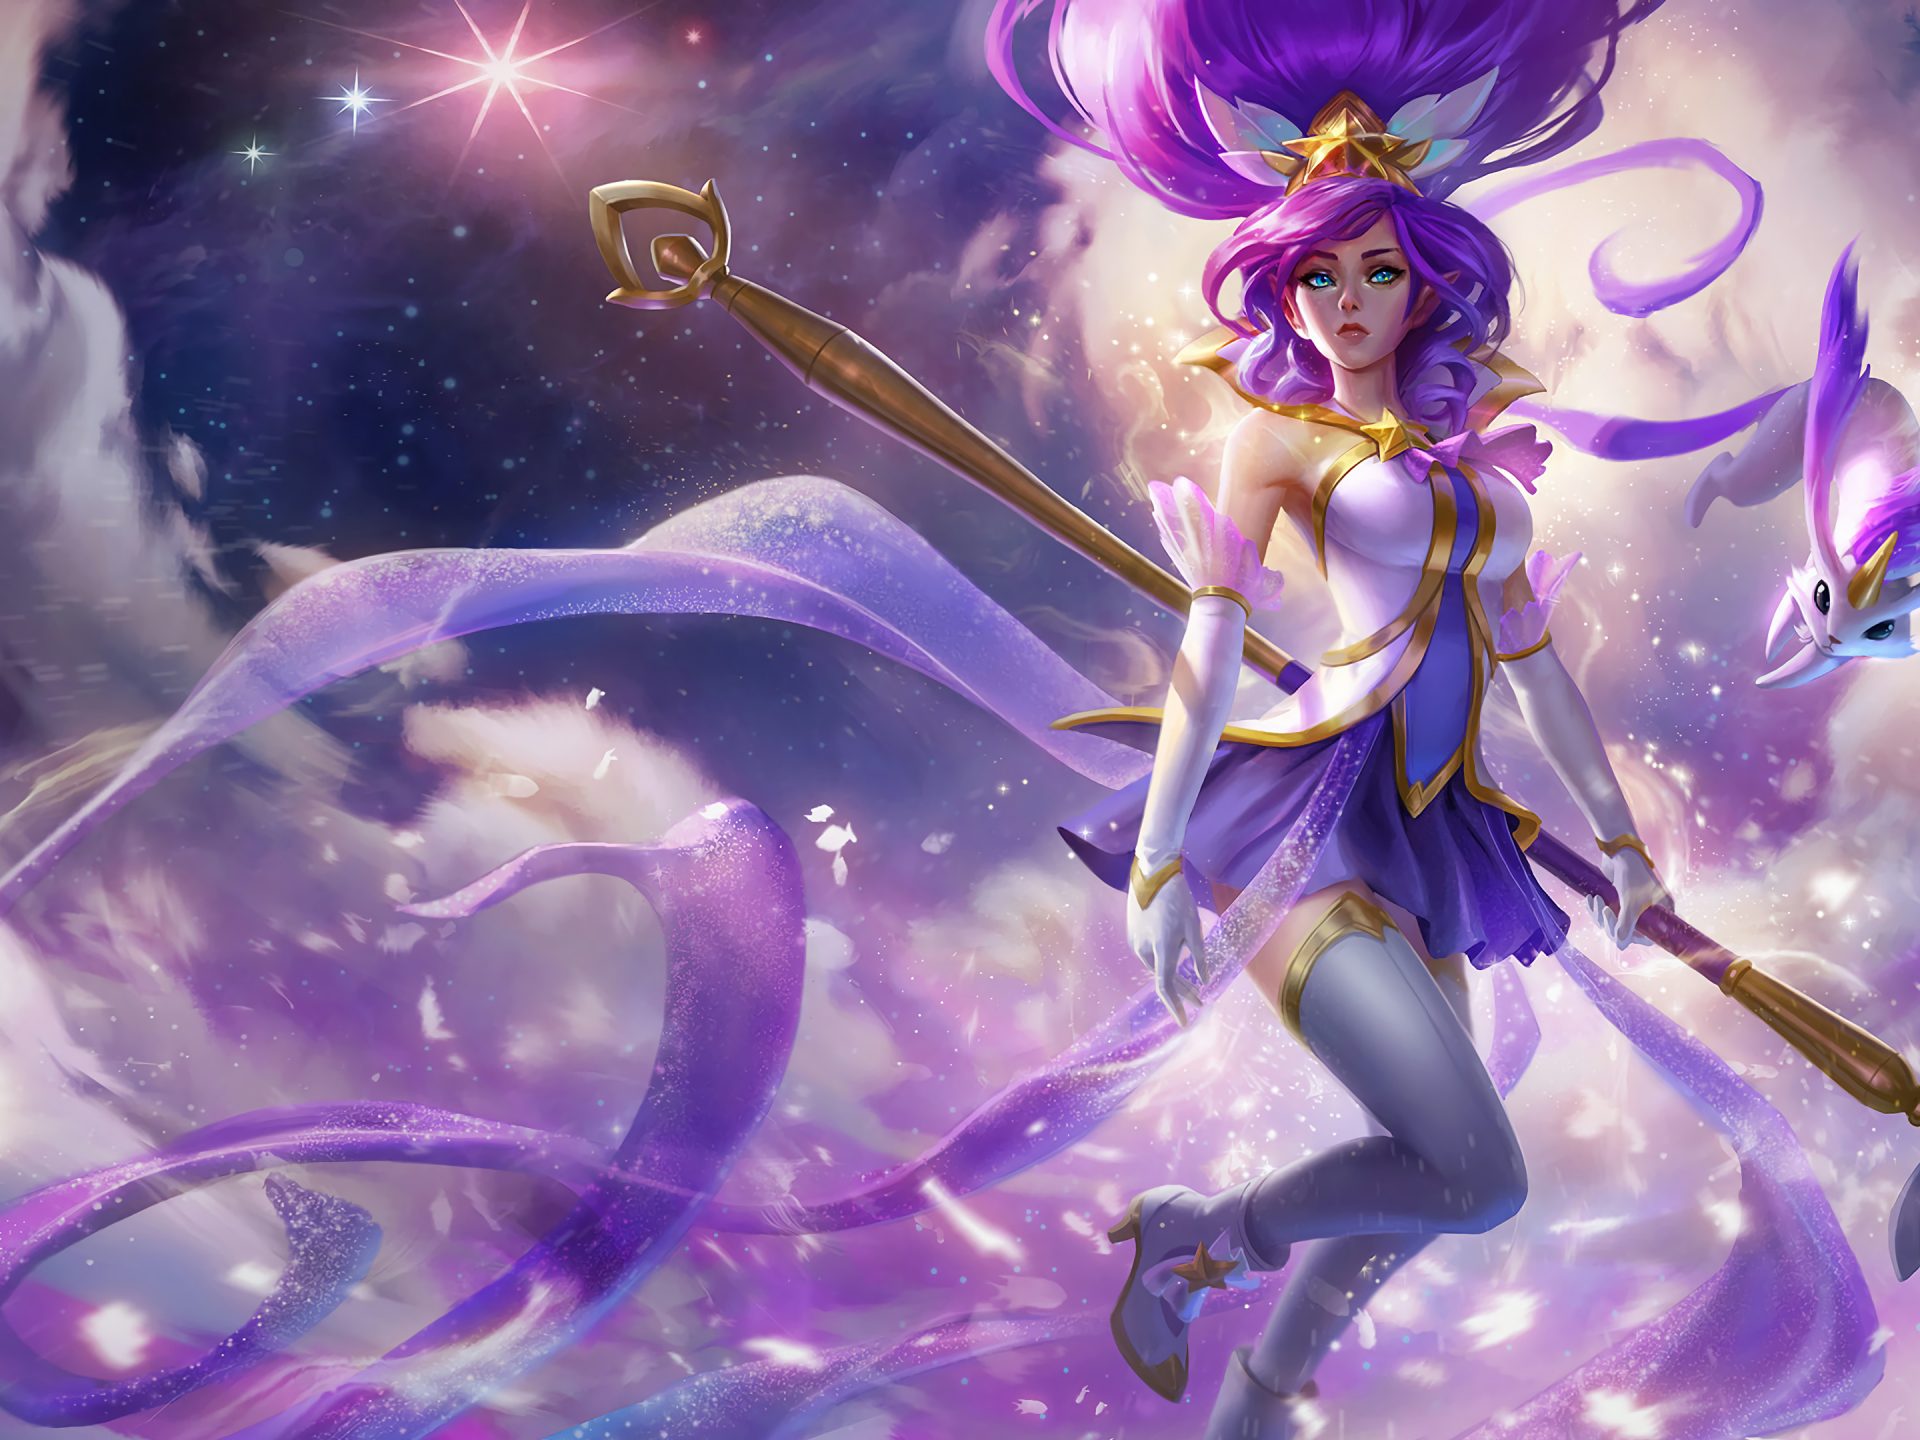 league of legends star guardian wallpaper,cg artwork,purple,violet,lavender,fictional character